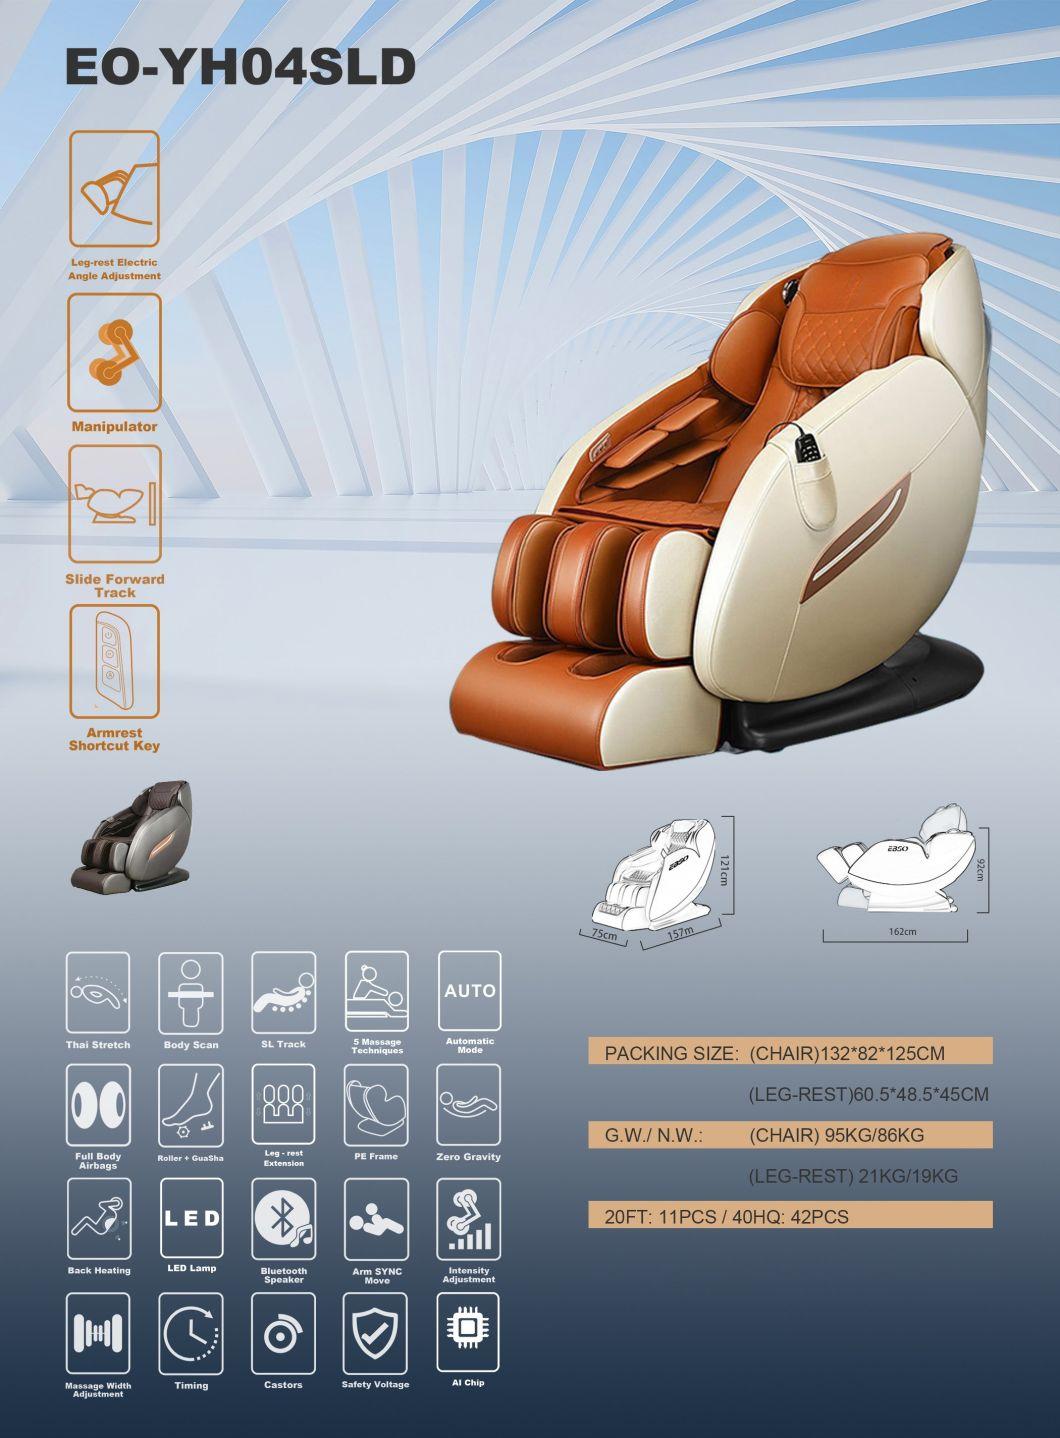 2022 New Style Luxury Massage Chair Shiatsu Airbags Chair Massage Zero Gravity